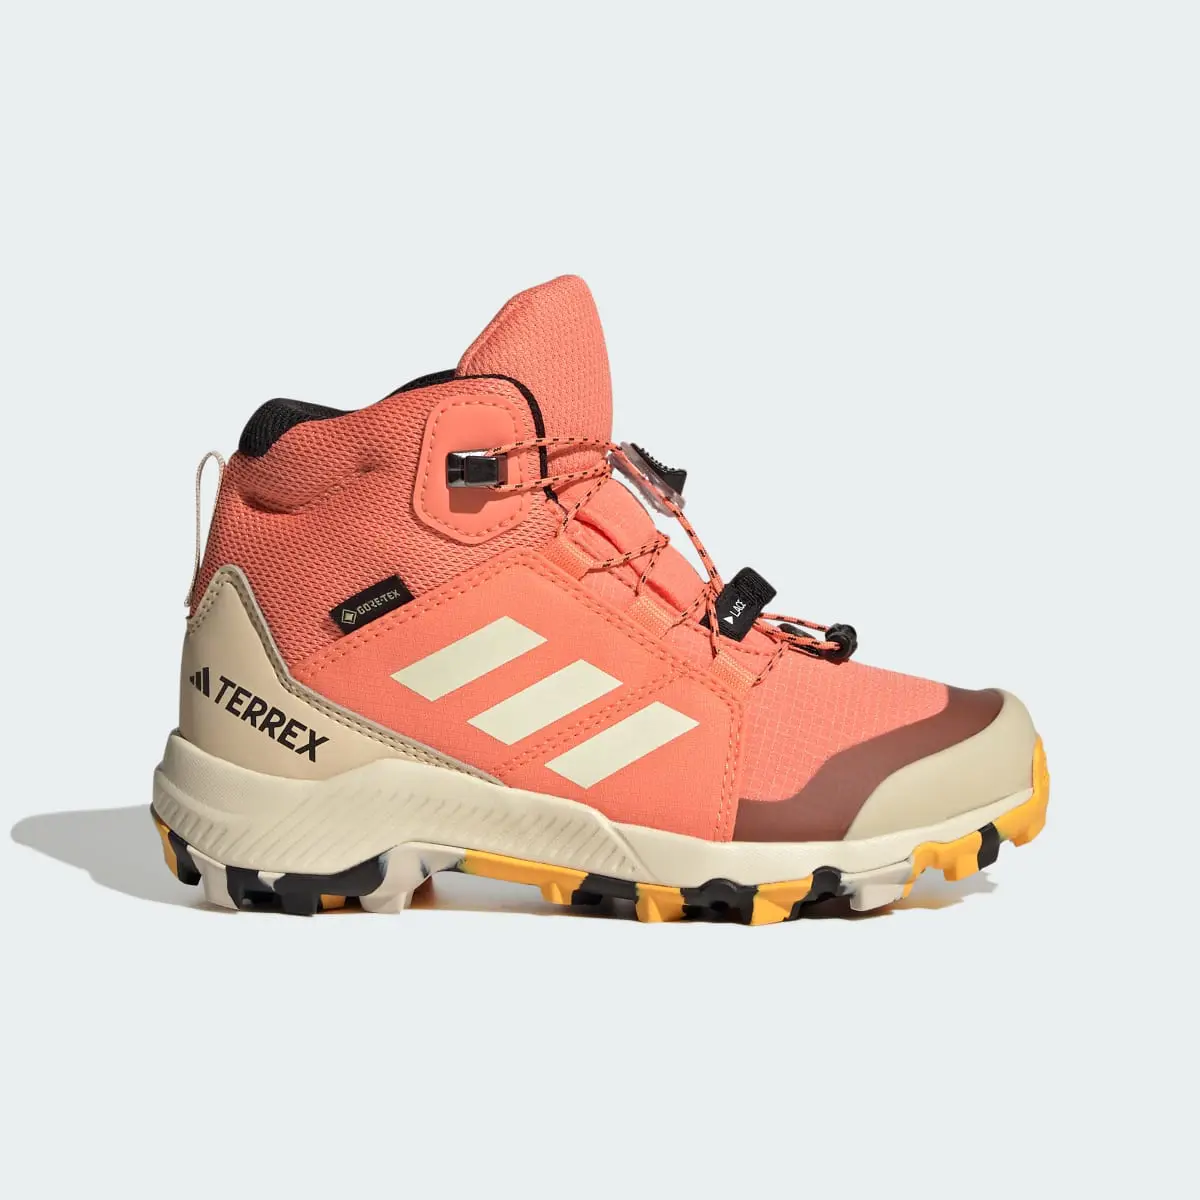 Adidas Chaussure de randonnée Organizer Mid GORE-TEX. 2